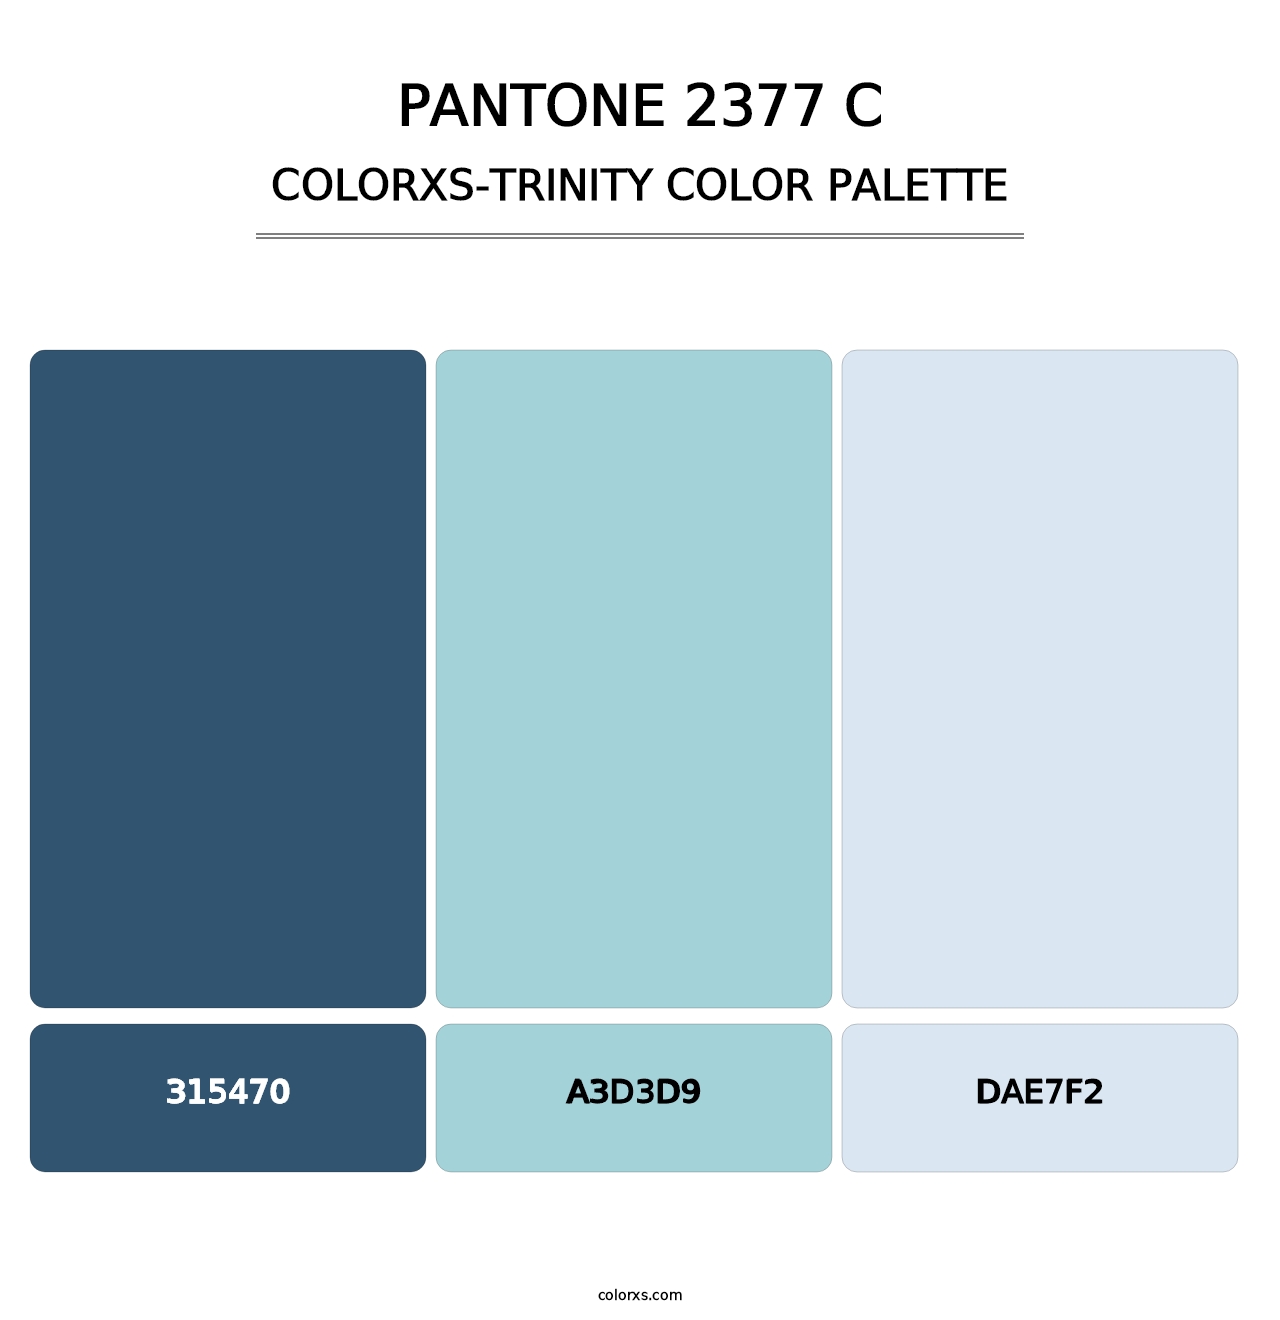 PANTONE 2377 C - Colorxs Trinity Palette